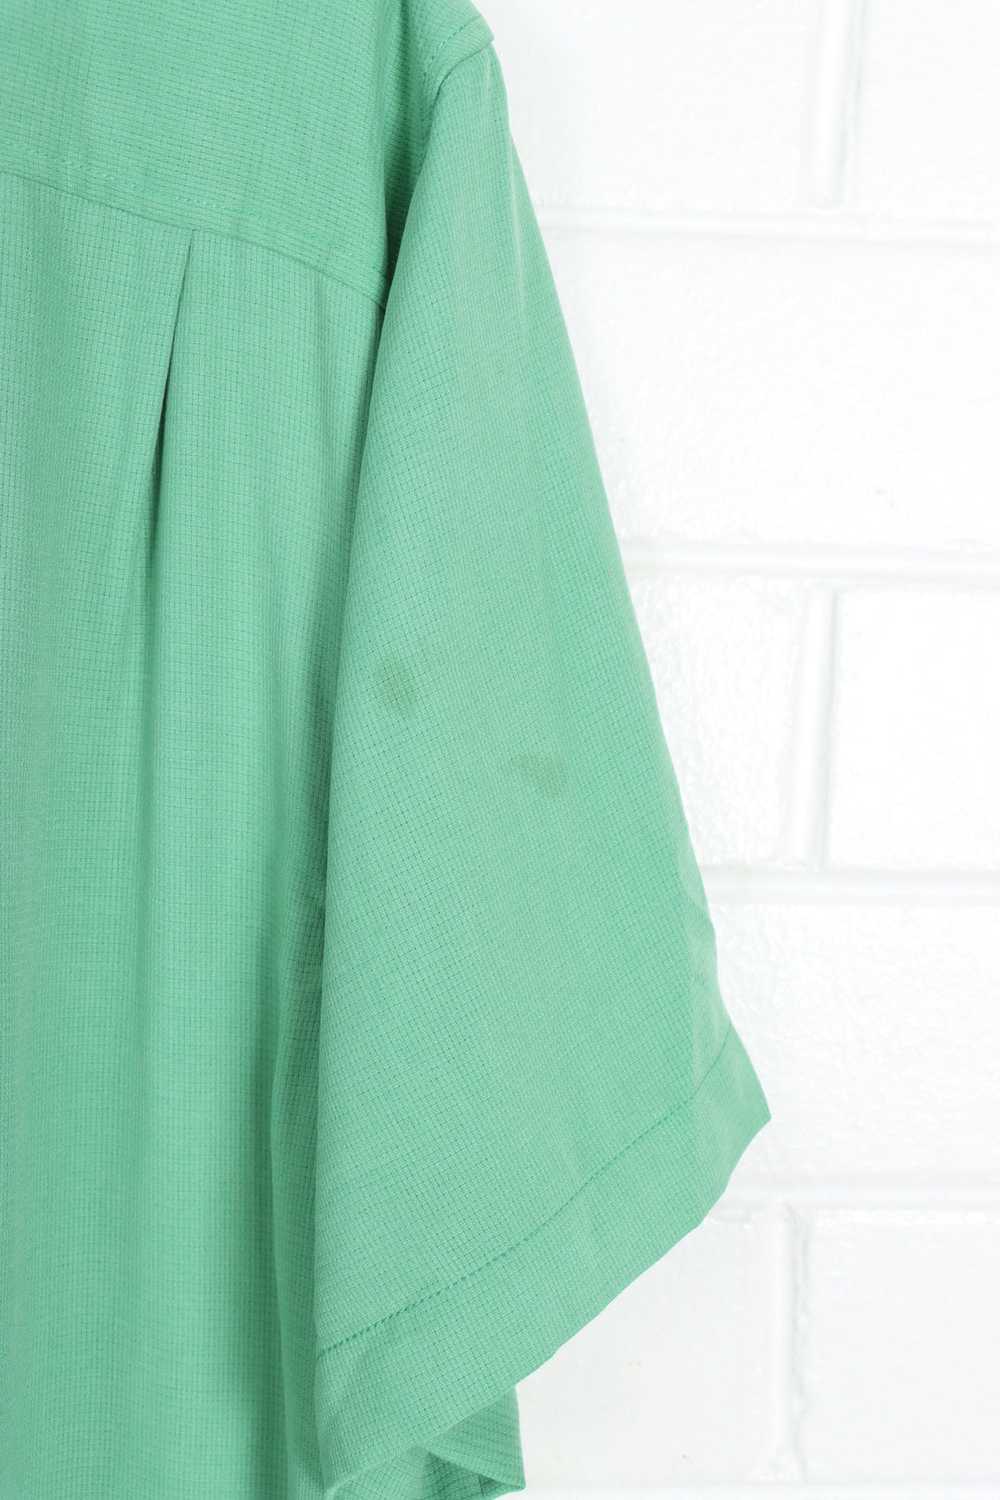 TOMMY BAHAMA Green Silk Short Sleeve Shirt (XL) - image 4